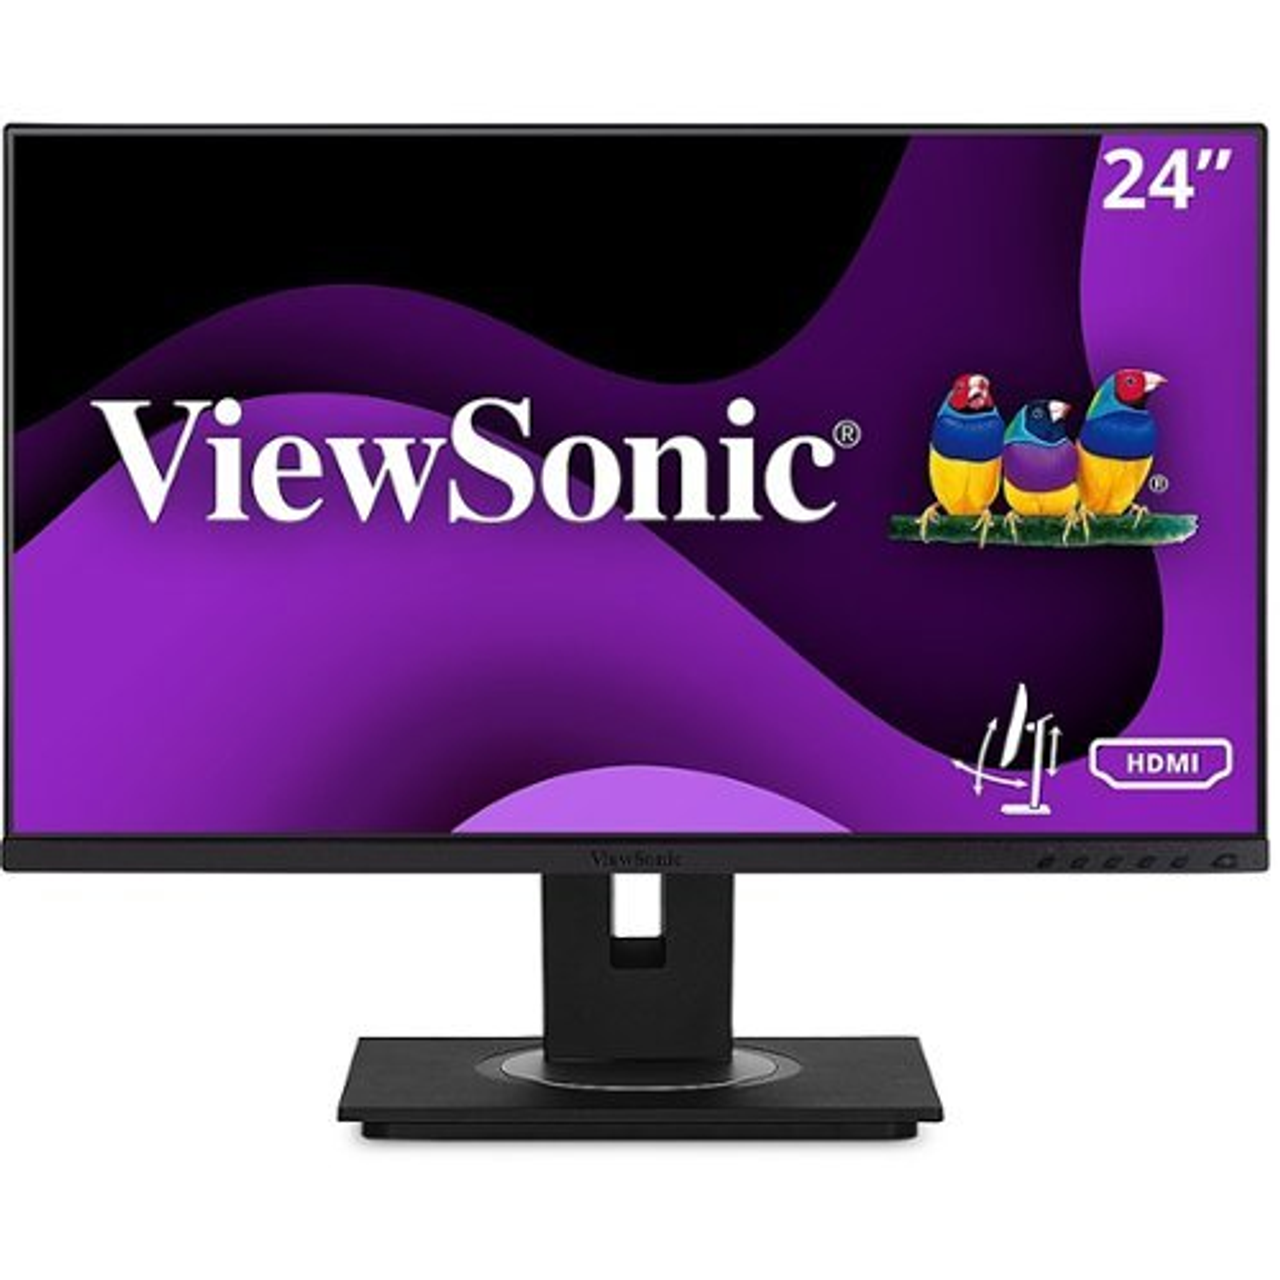 ViewSonic - 23.8 LCD FHD Monitor (DisplayPort VGA, USB, HDMI)